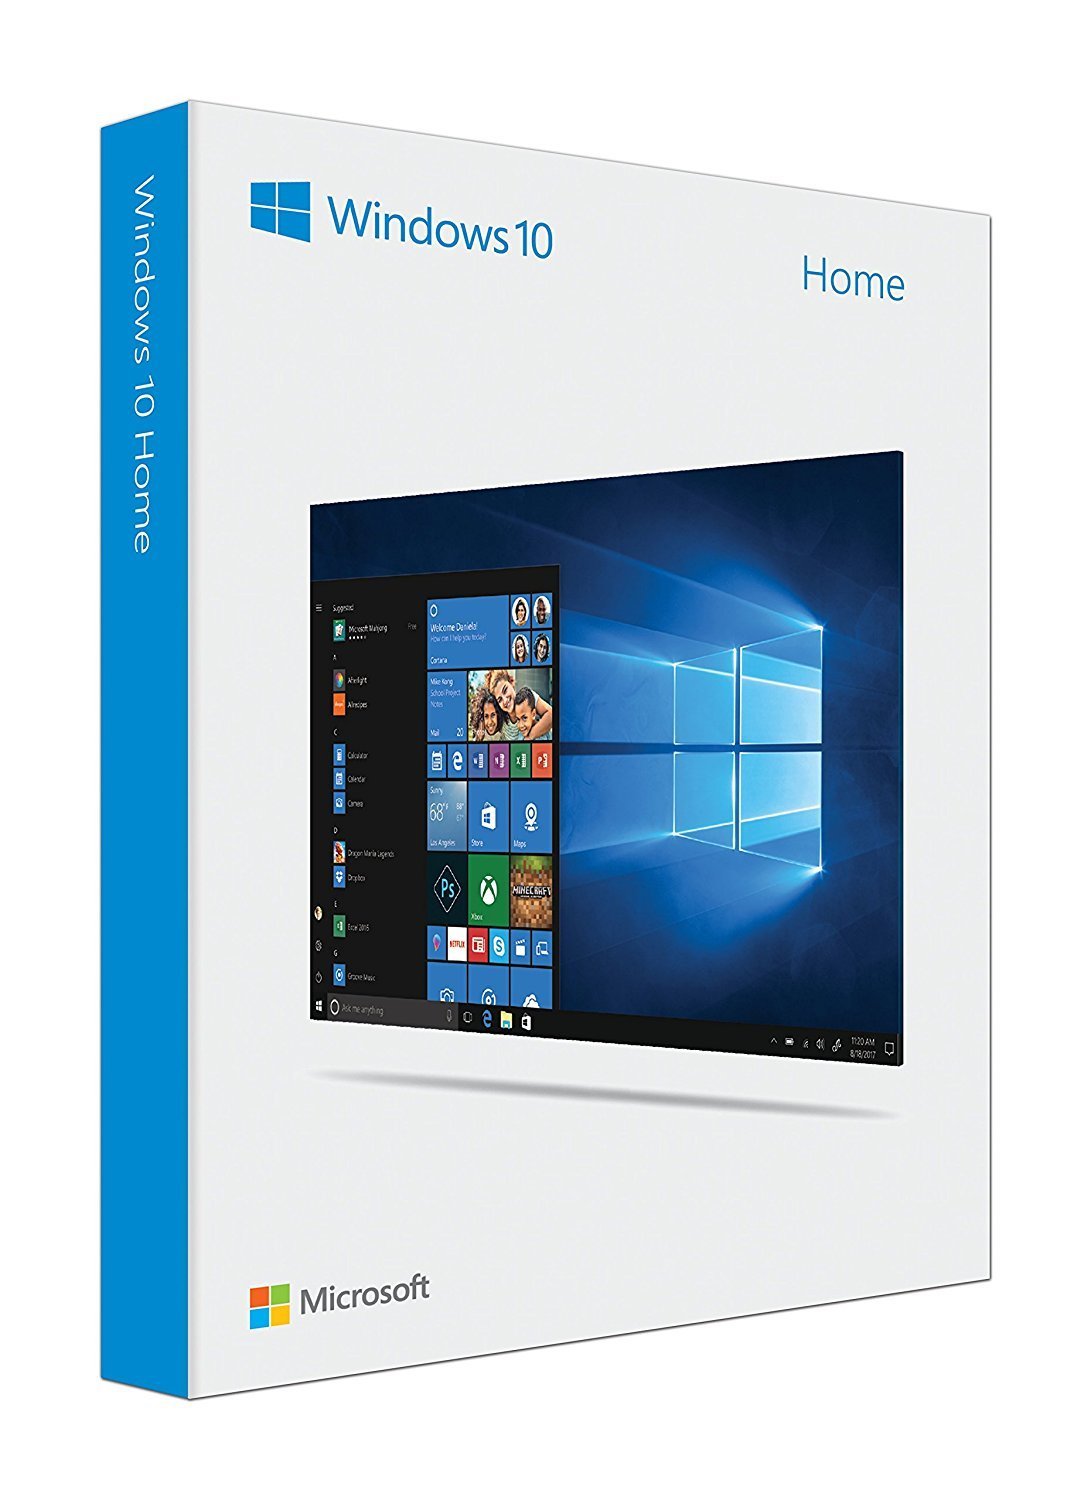 Product Key Viewer Windows 10